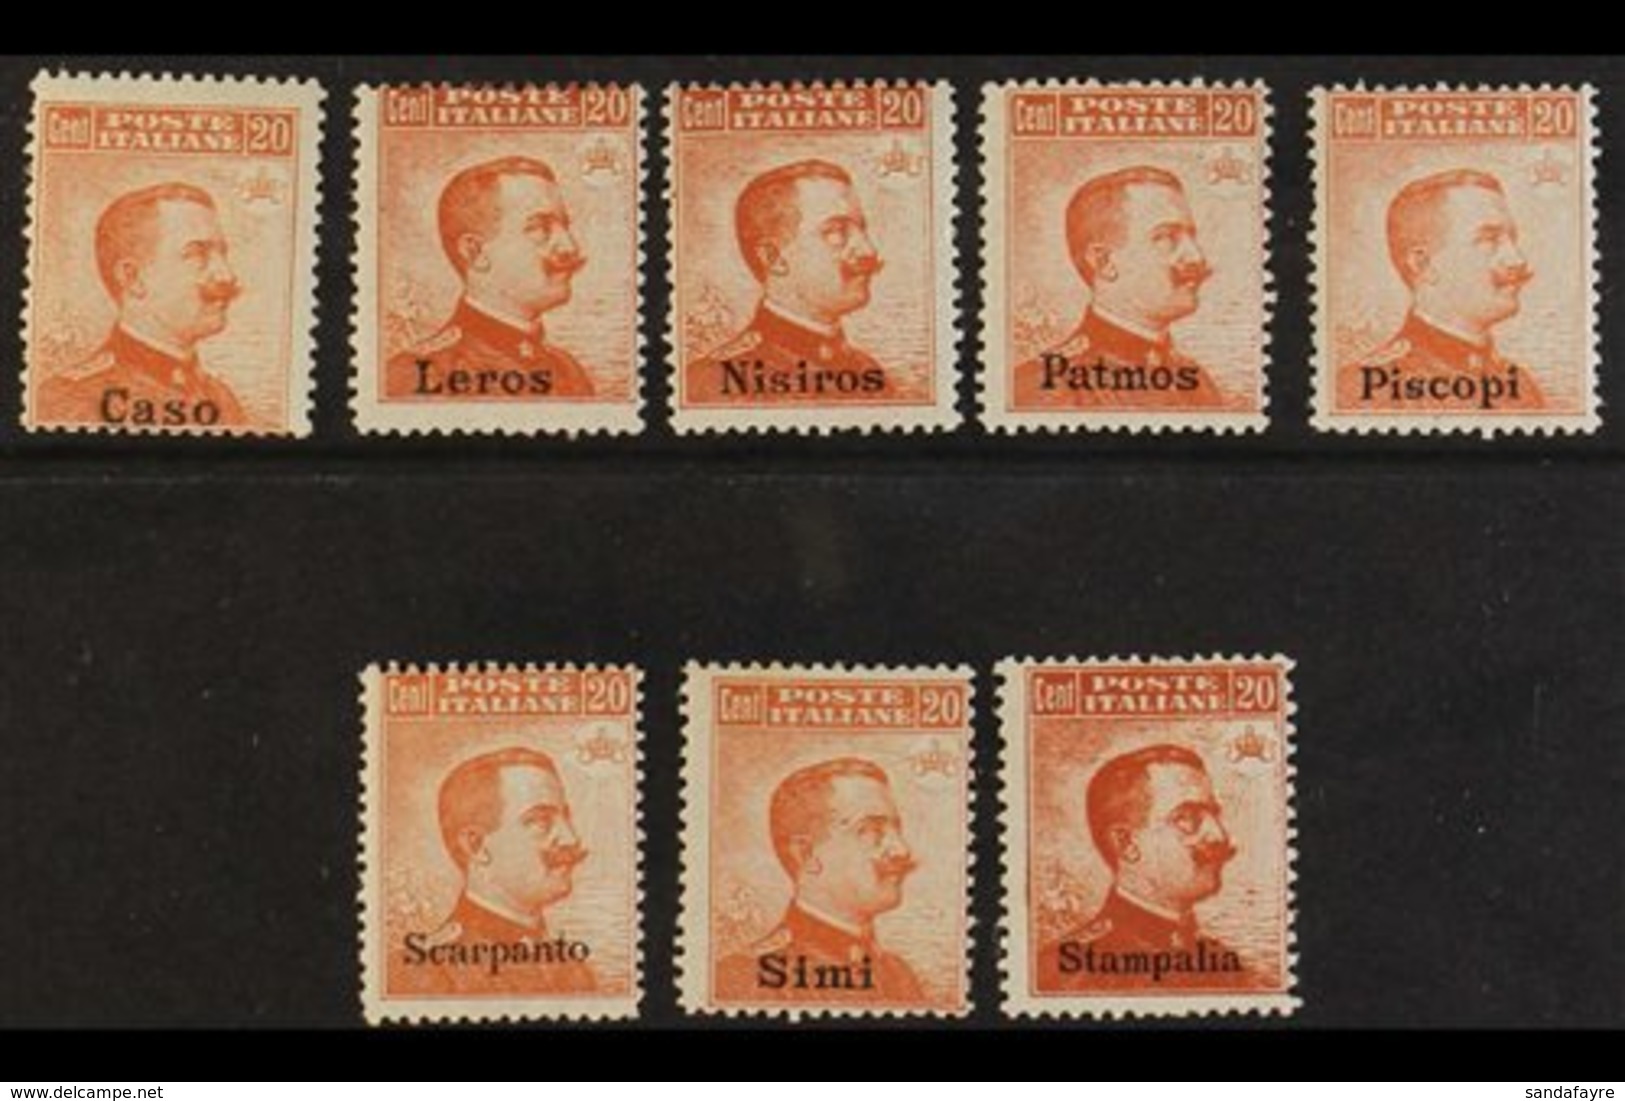 1917 20c Orange, No Watermark Ovptd Issues From Caso, Leros, Nisiros, Patmos, Piscopi, Scarpanto, Simi & Stampalia, Sass - Egée